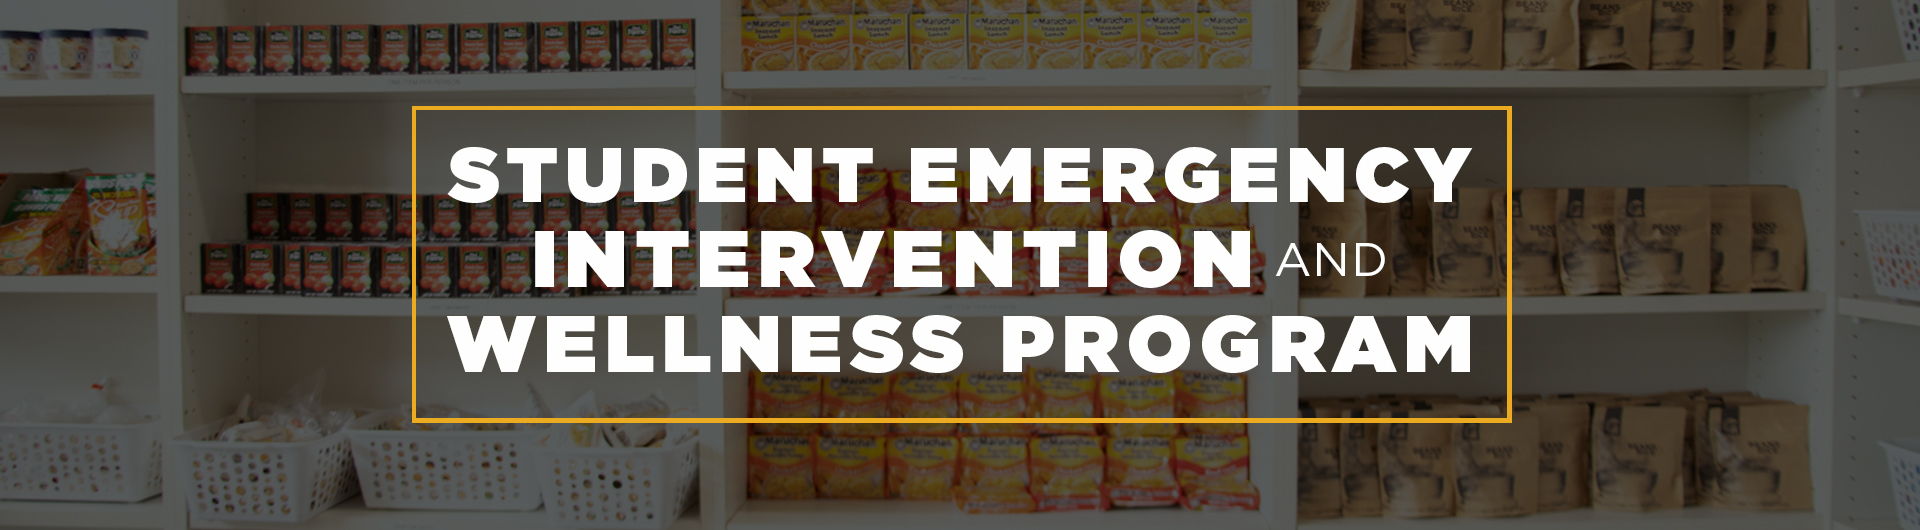 Student Emergency Intervention And Wellness Program Banner